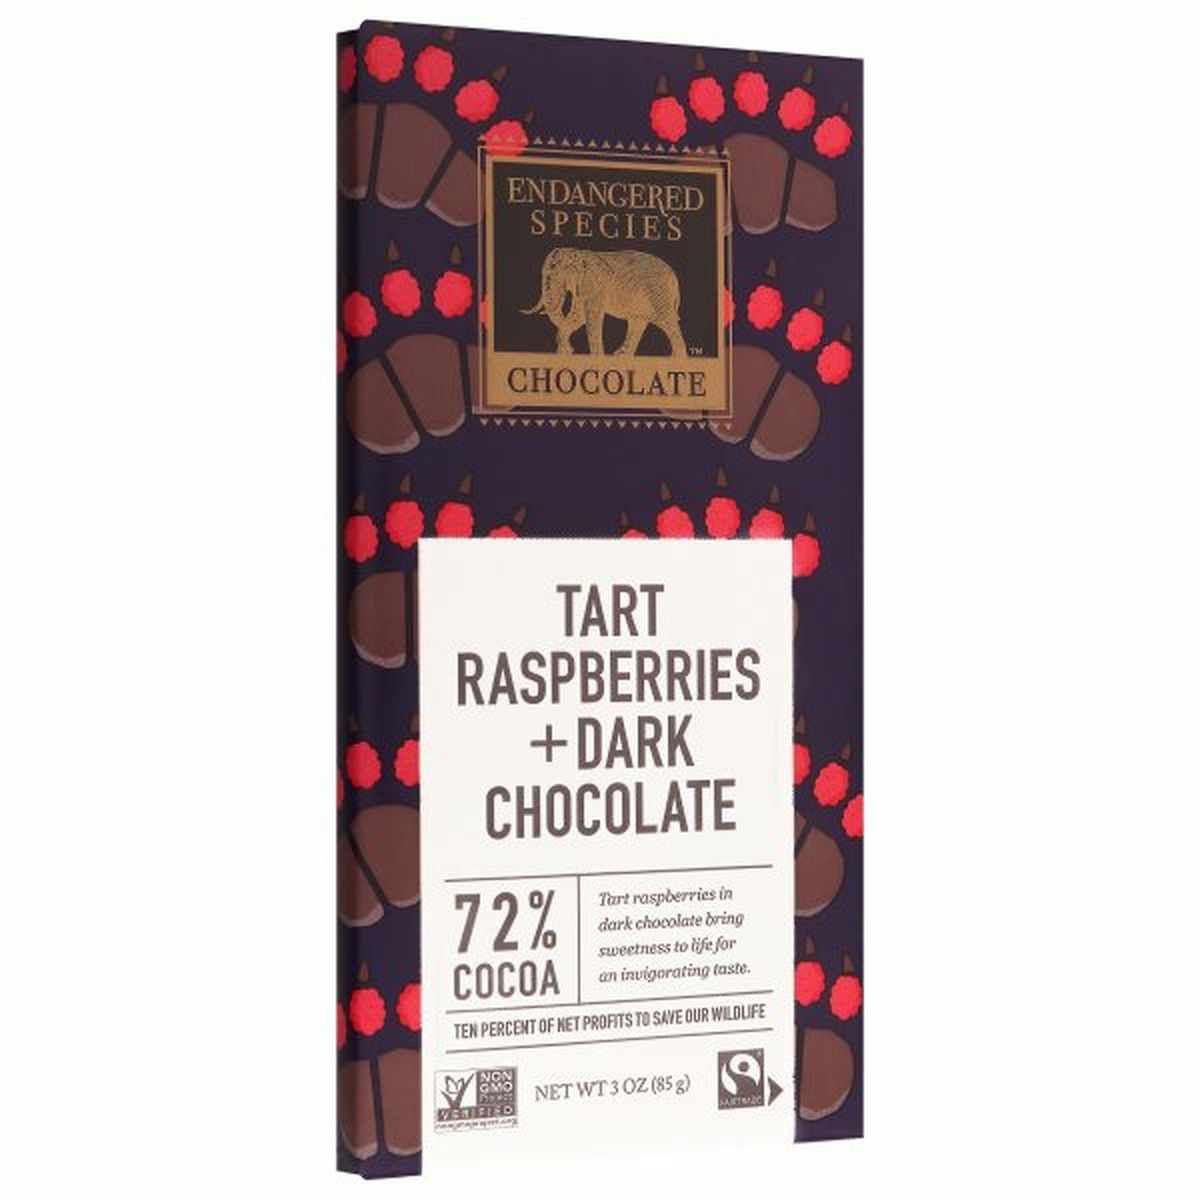 Calories in Endangered Species Chocolate, Tart Raspberries + Dark Chocolate, 72% Cocoa